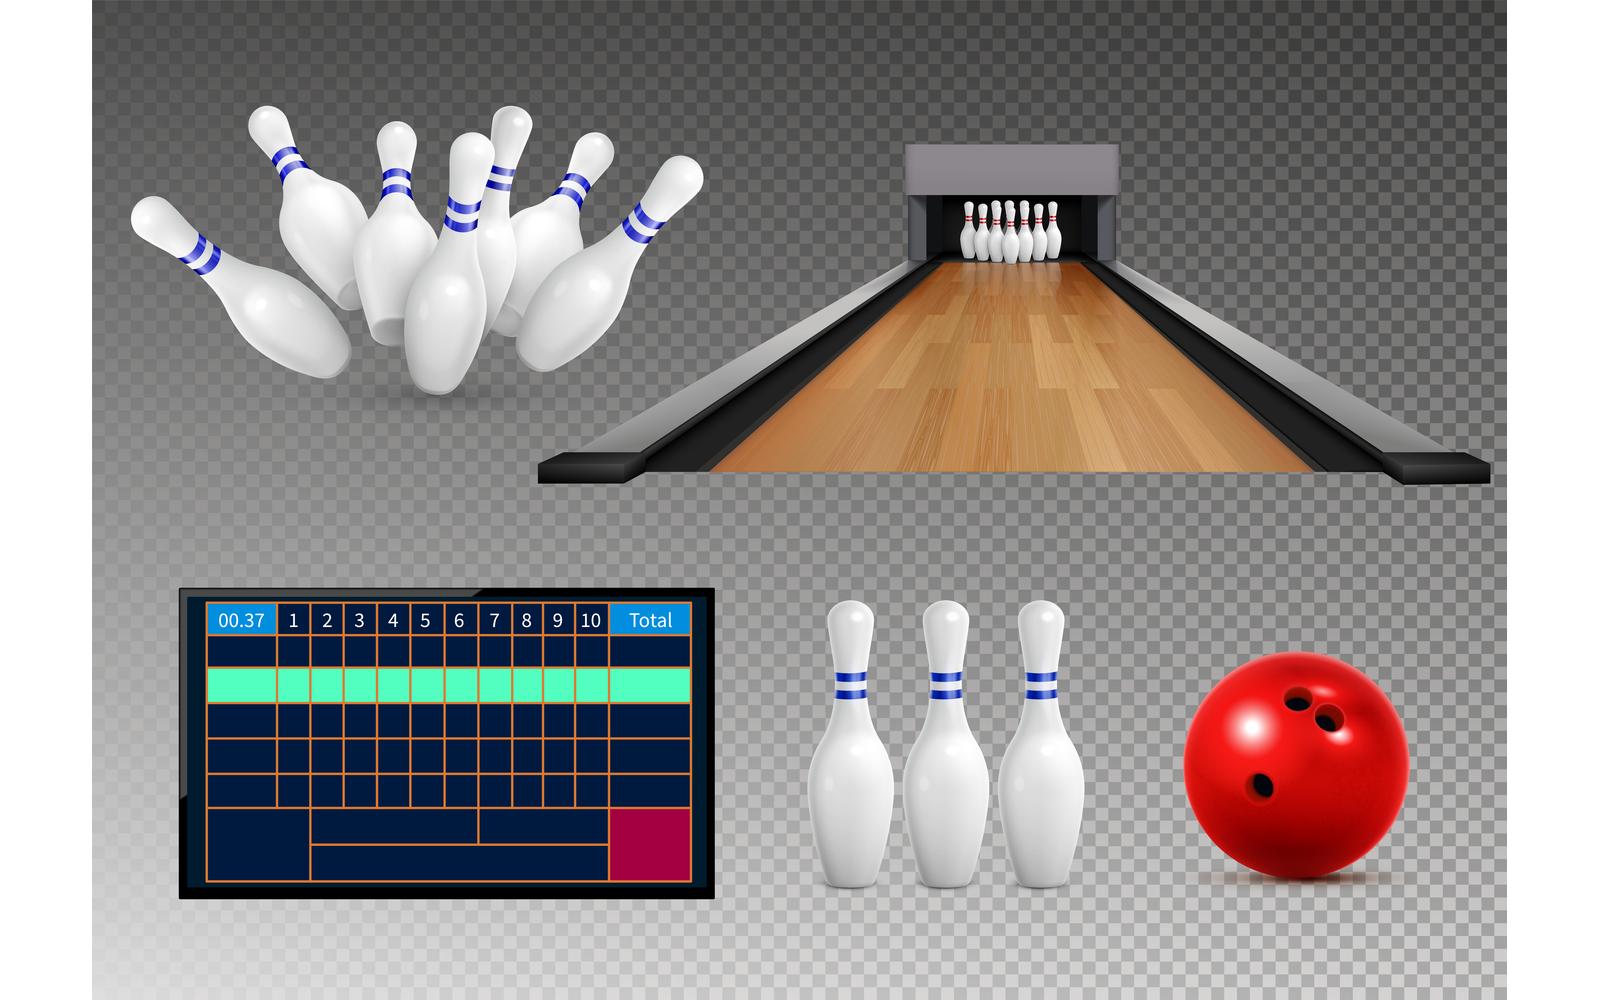 Bowling Realistic Set Transparent 201221127 Vector Illustration Concept